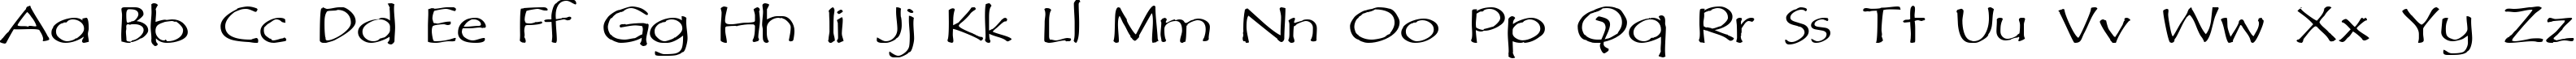 Пример написания английского алфавита шрифтом DiMurphic